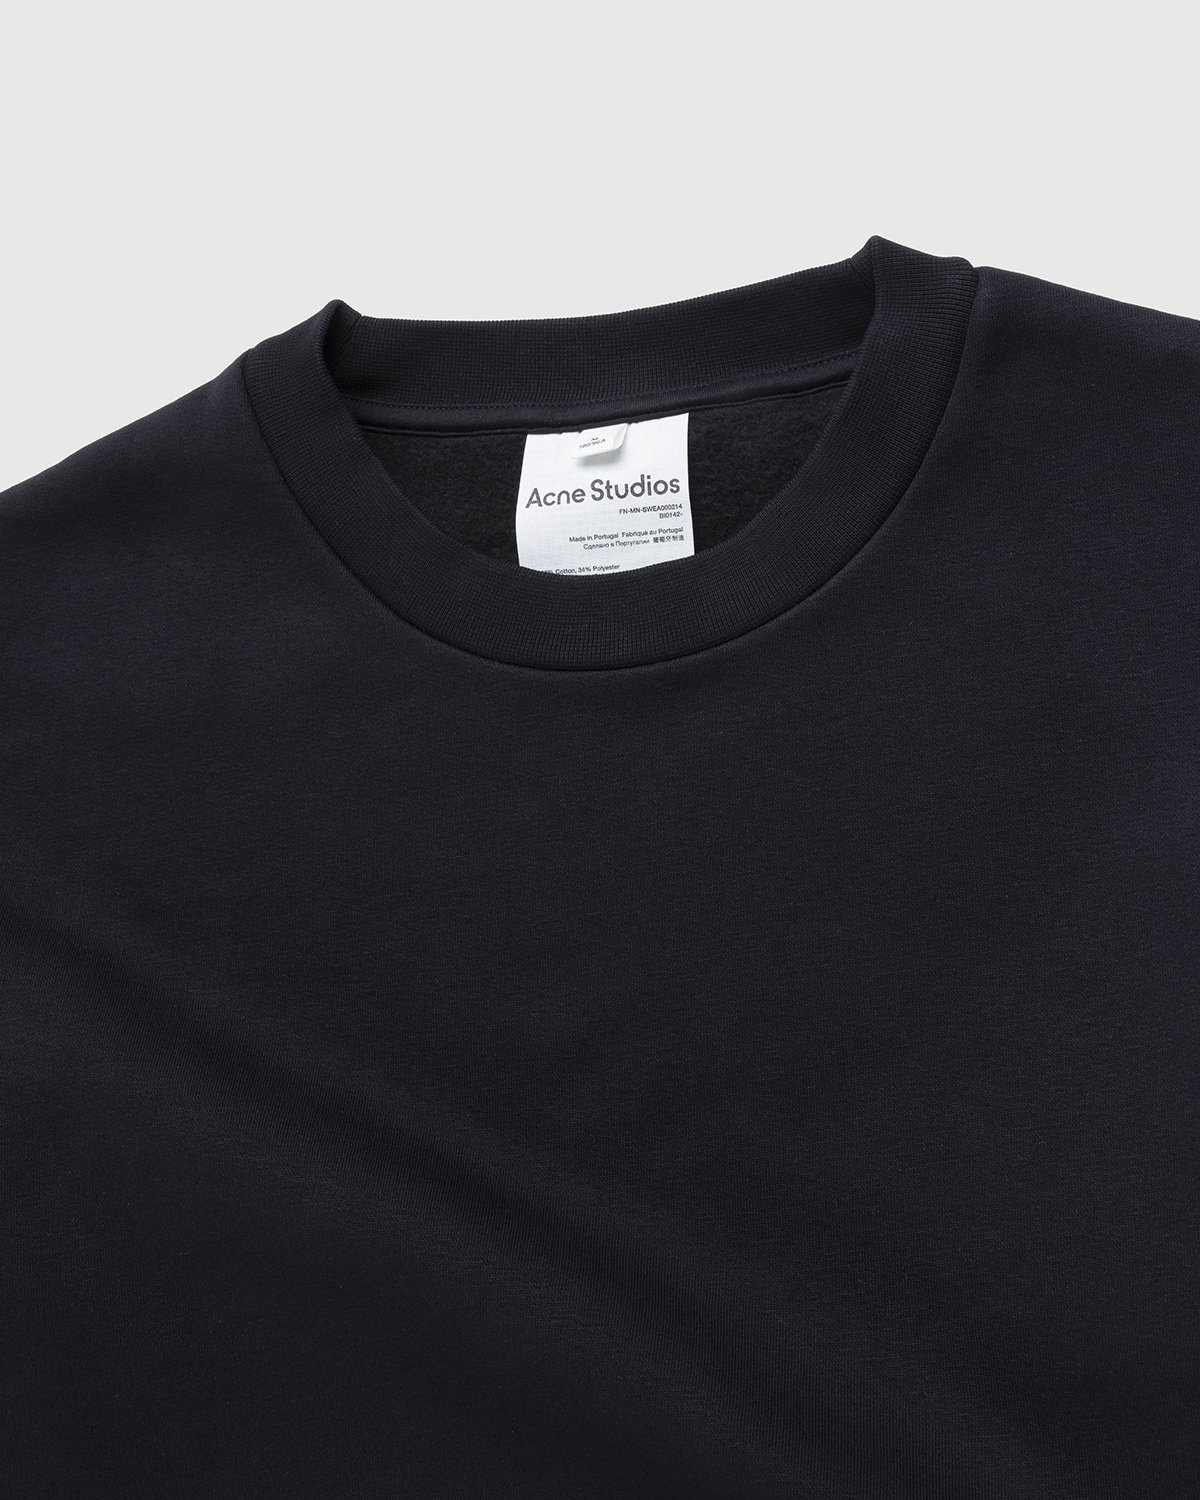 Acne Studios – Brushed Sweatshirt Black - Sweatshirts - Black - Image 5